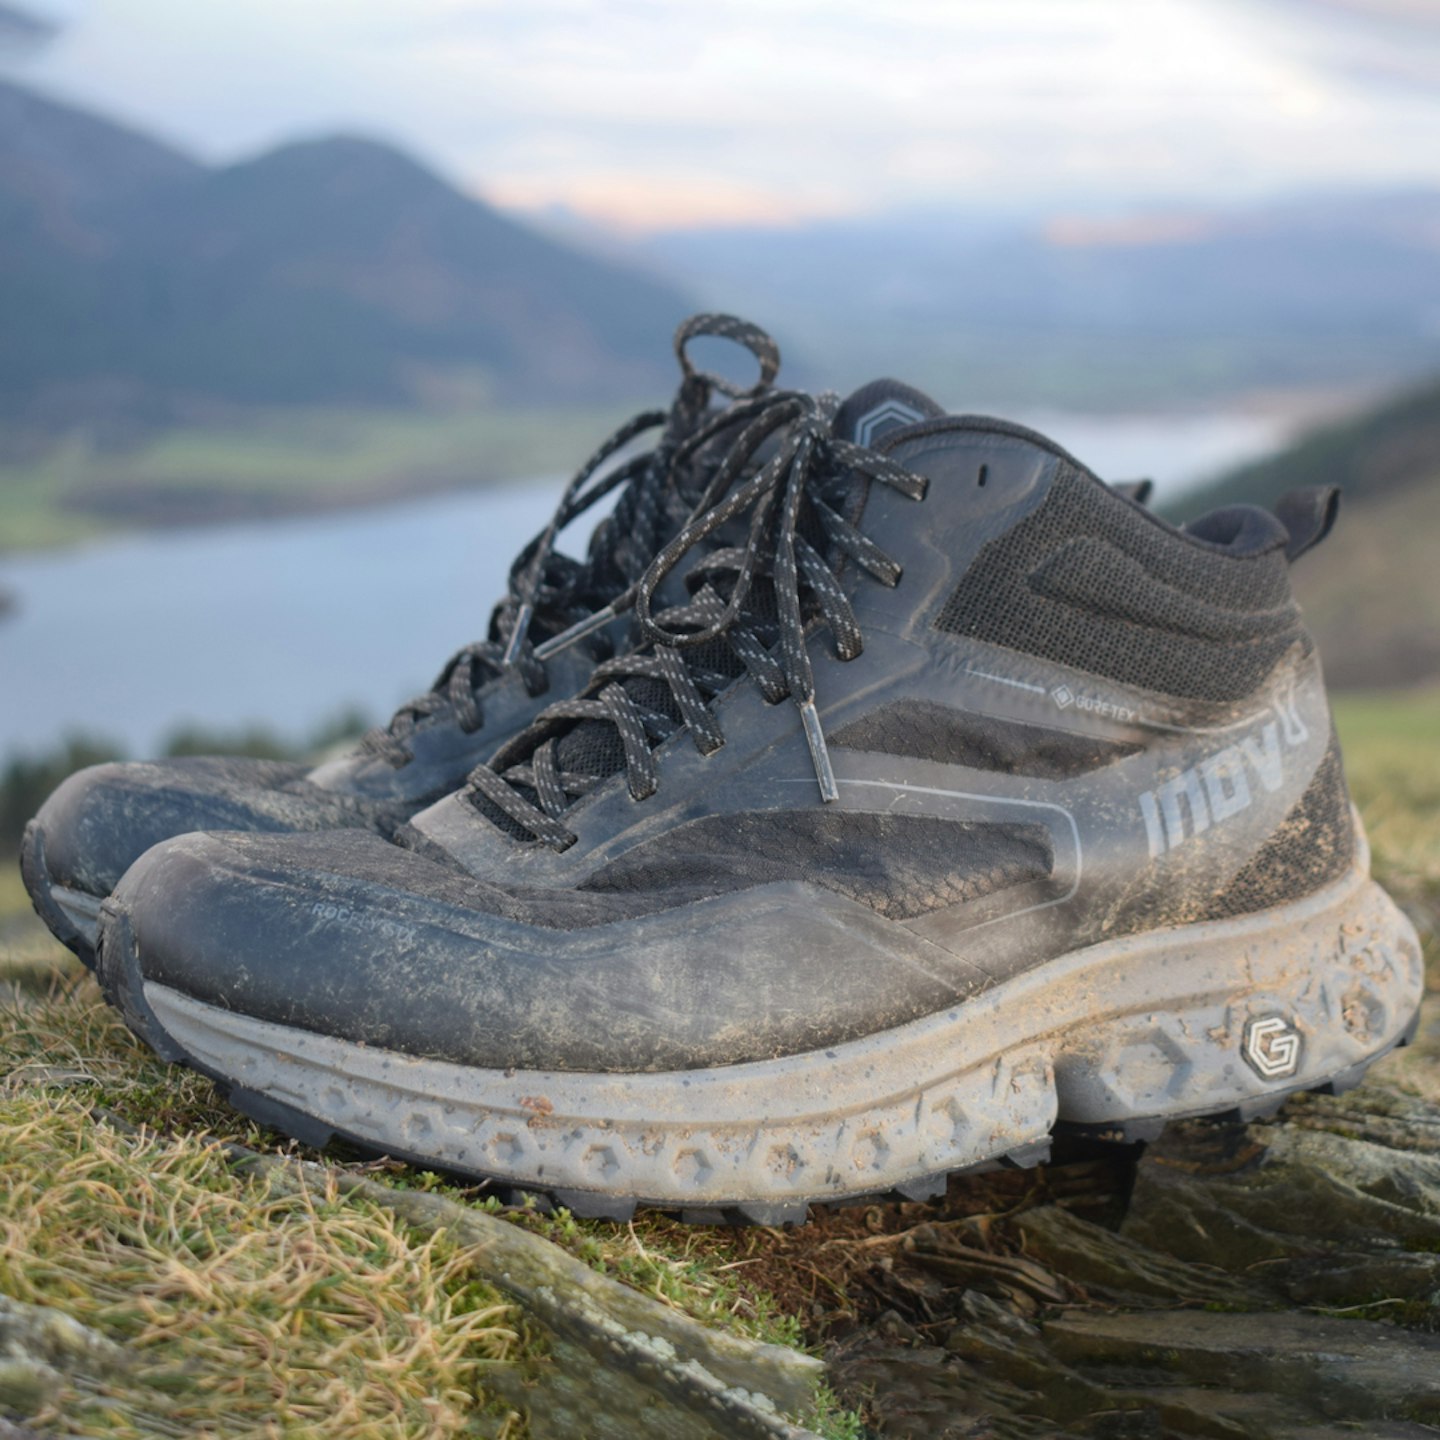 inov-8 RocFly G 390 GTX hiking boots square